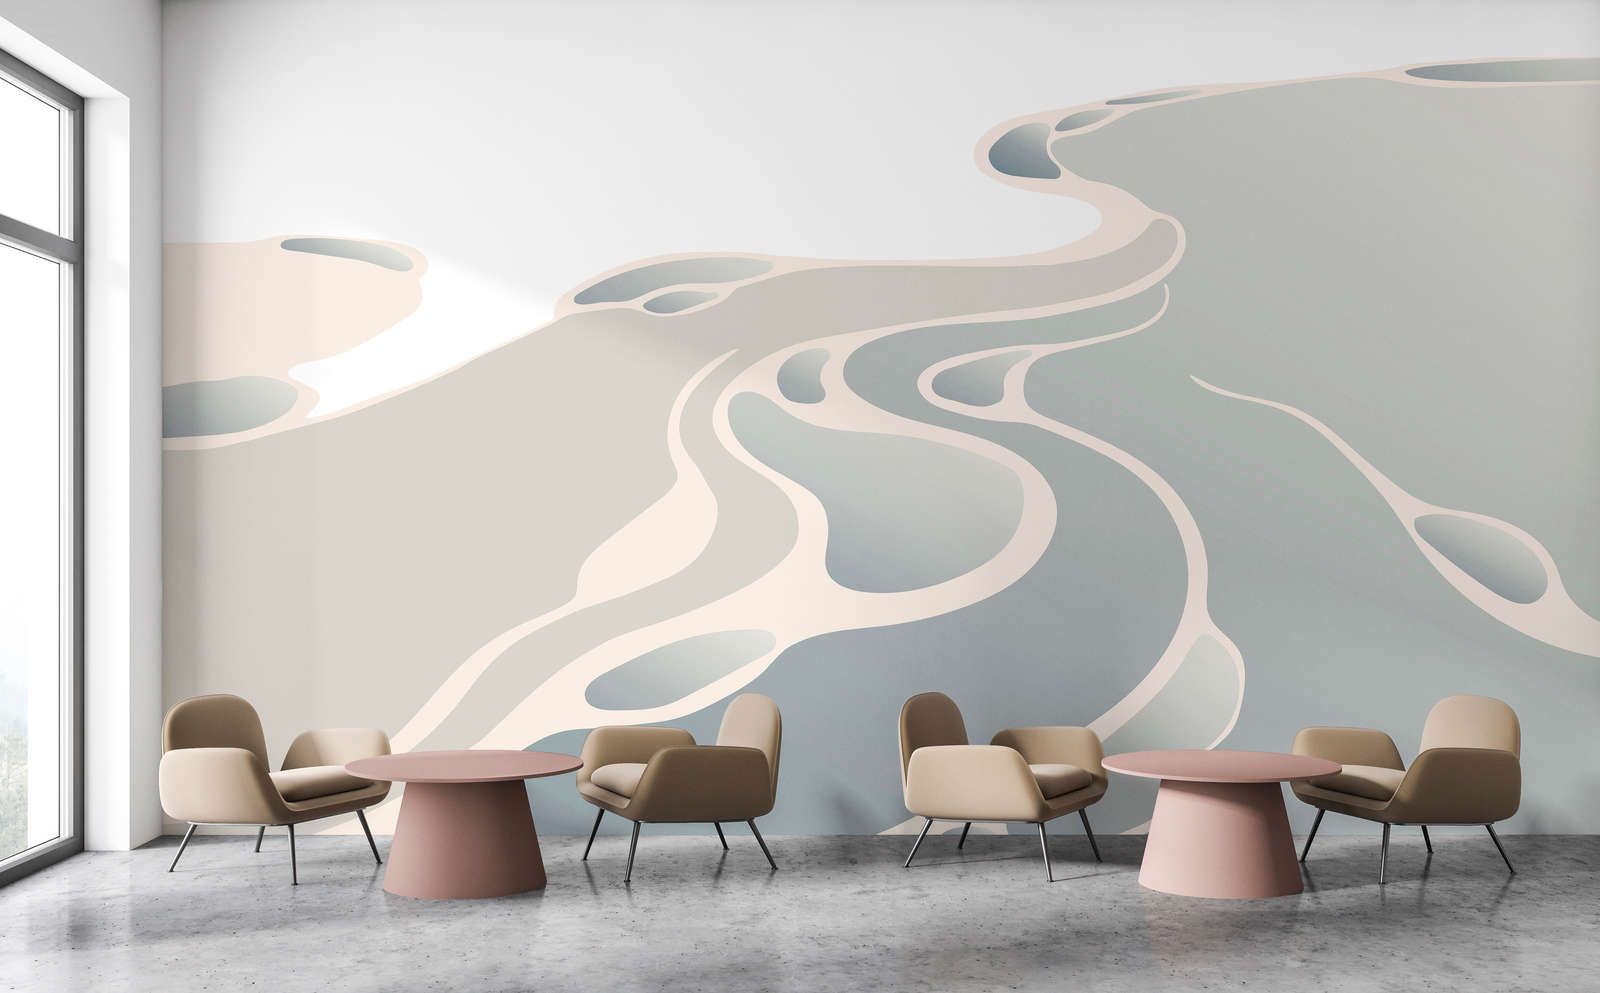             Photo wallpaper »delta« - Abstract desert landscape - Lightly textured non-woven fabric
        